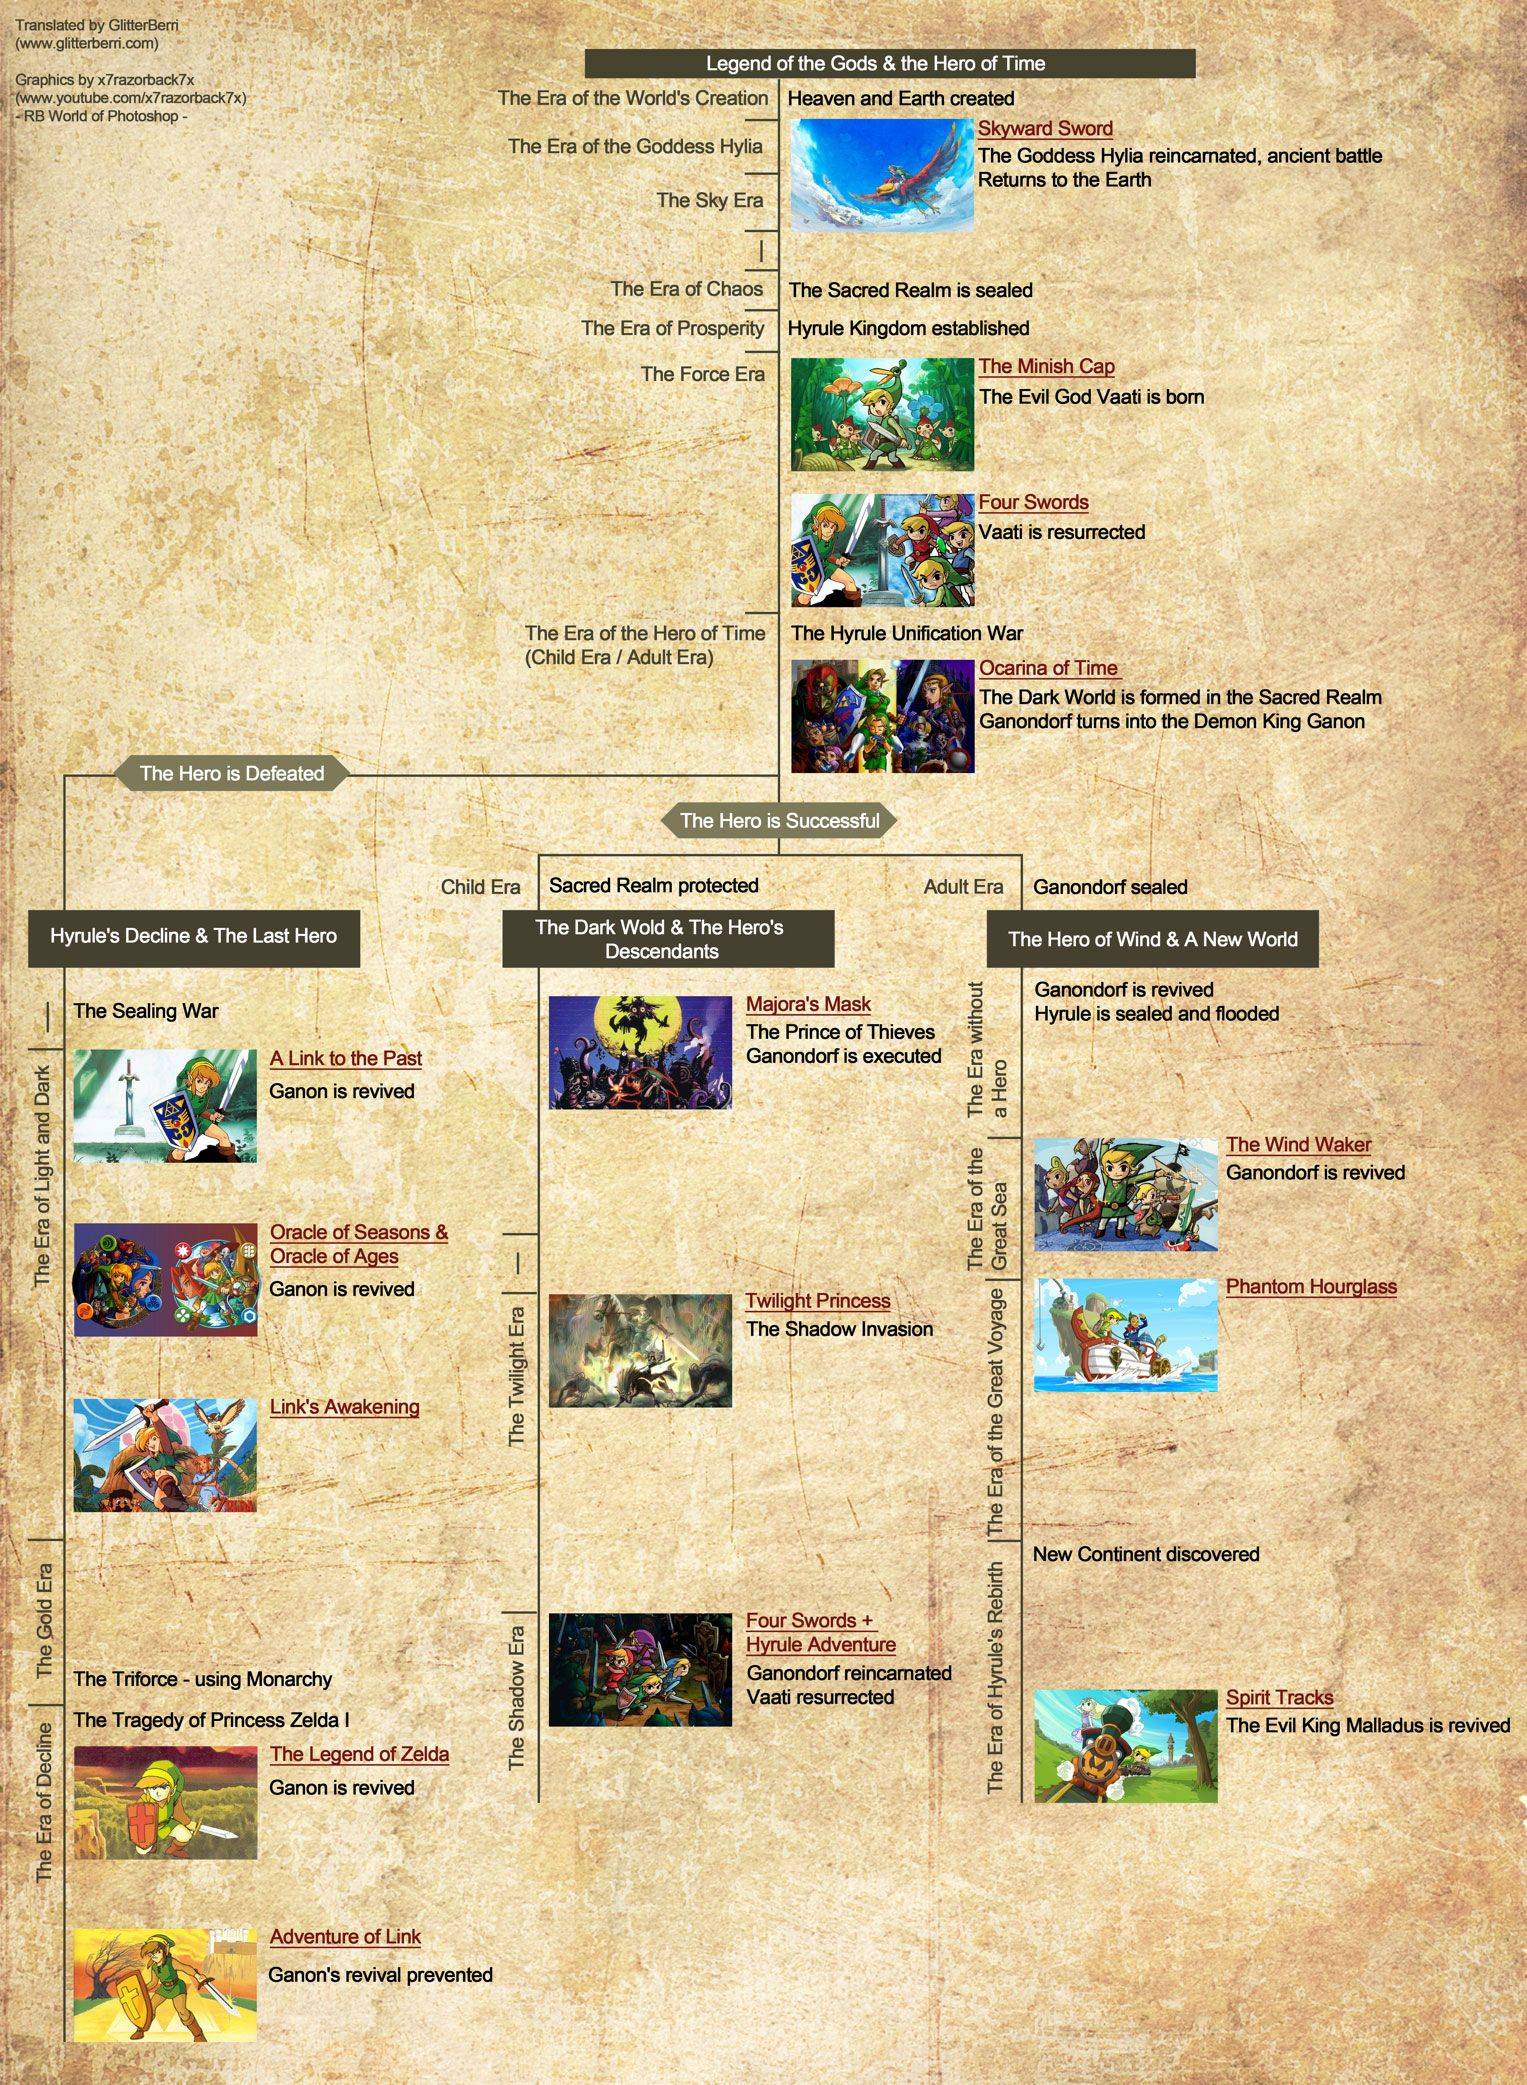 This is the Zelda series timeline Gematsu